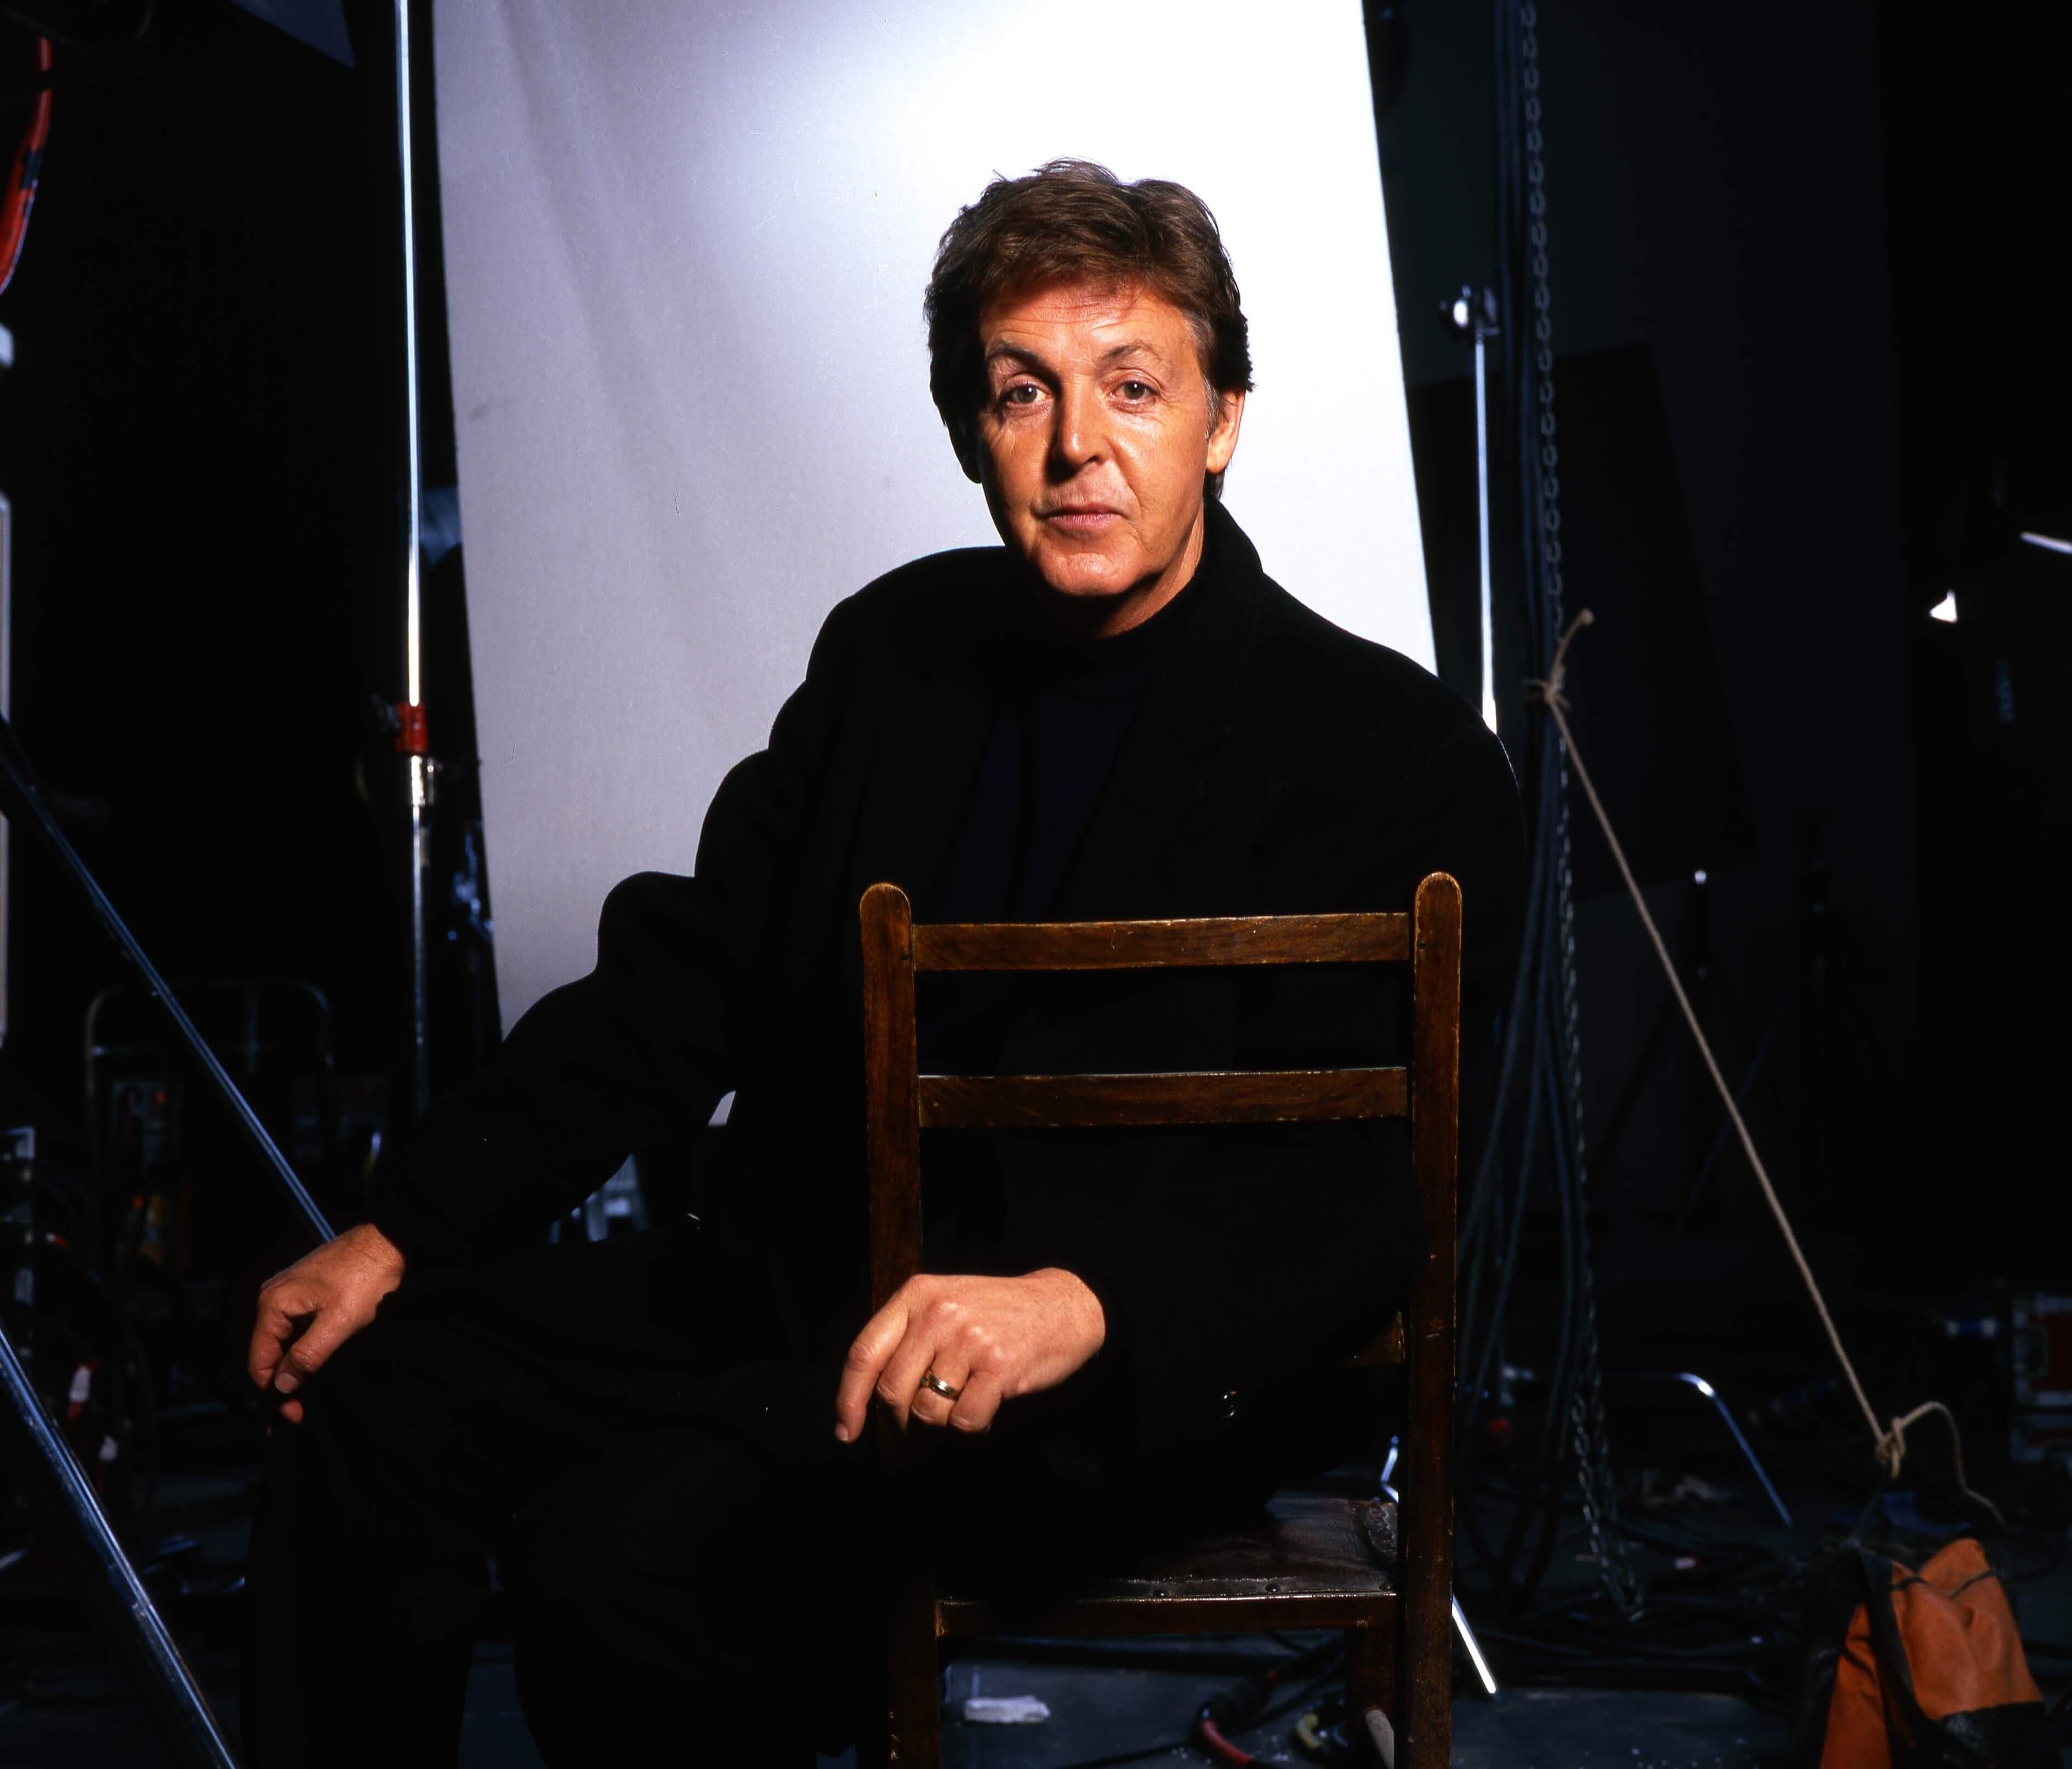 Paul McCartney dressed in black